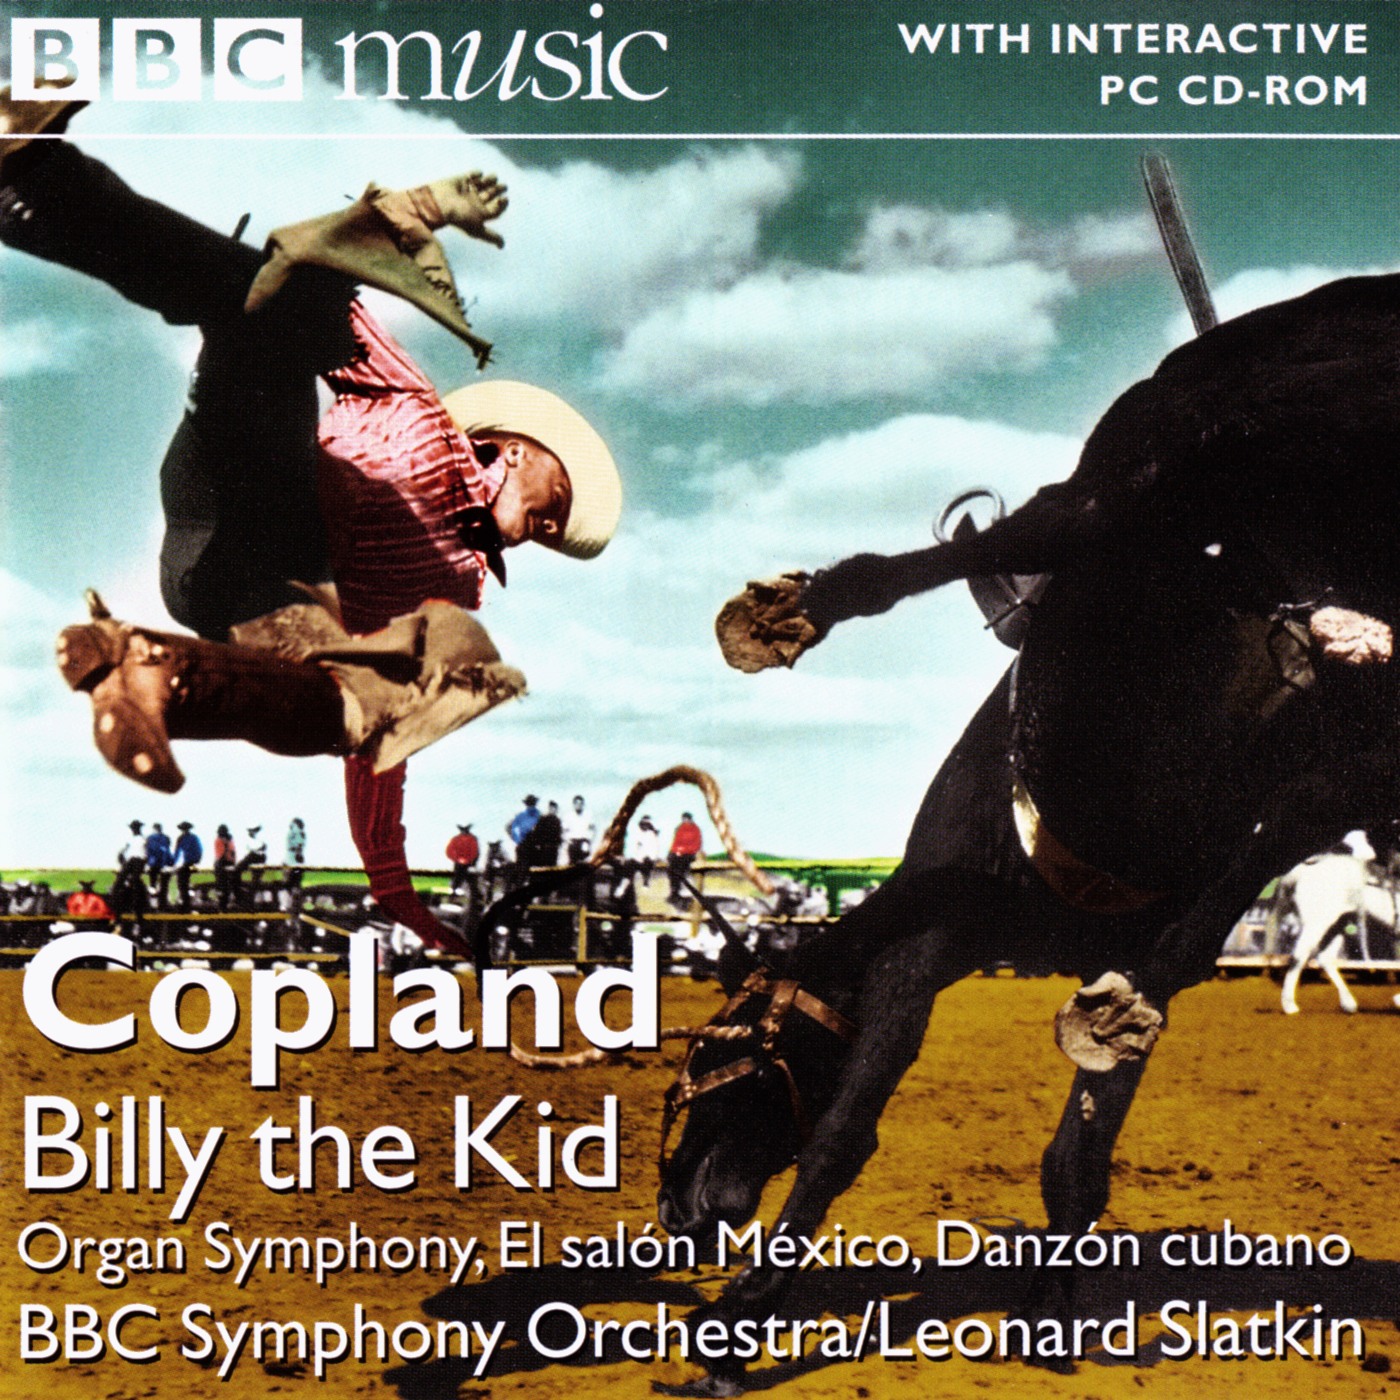 Aaron Copland - Billy the Kid - Organ Symphony